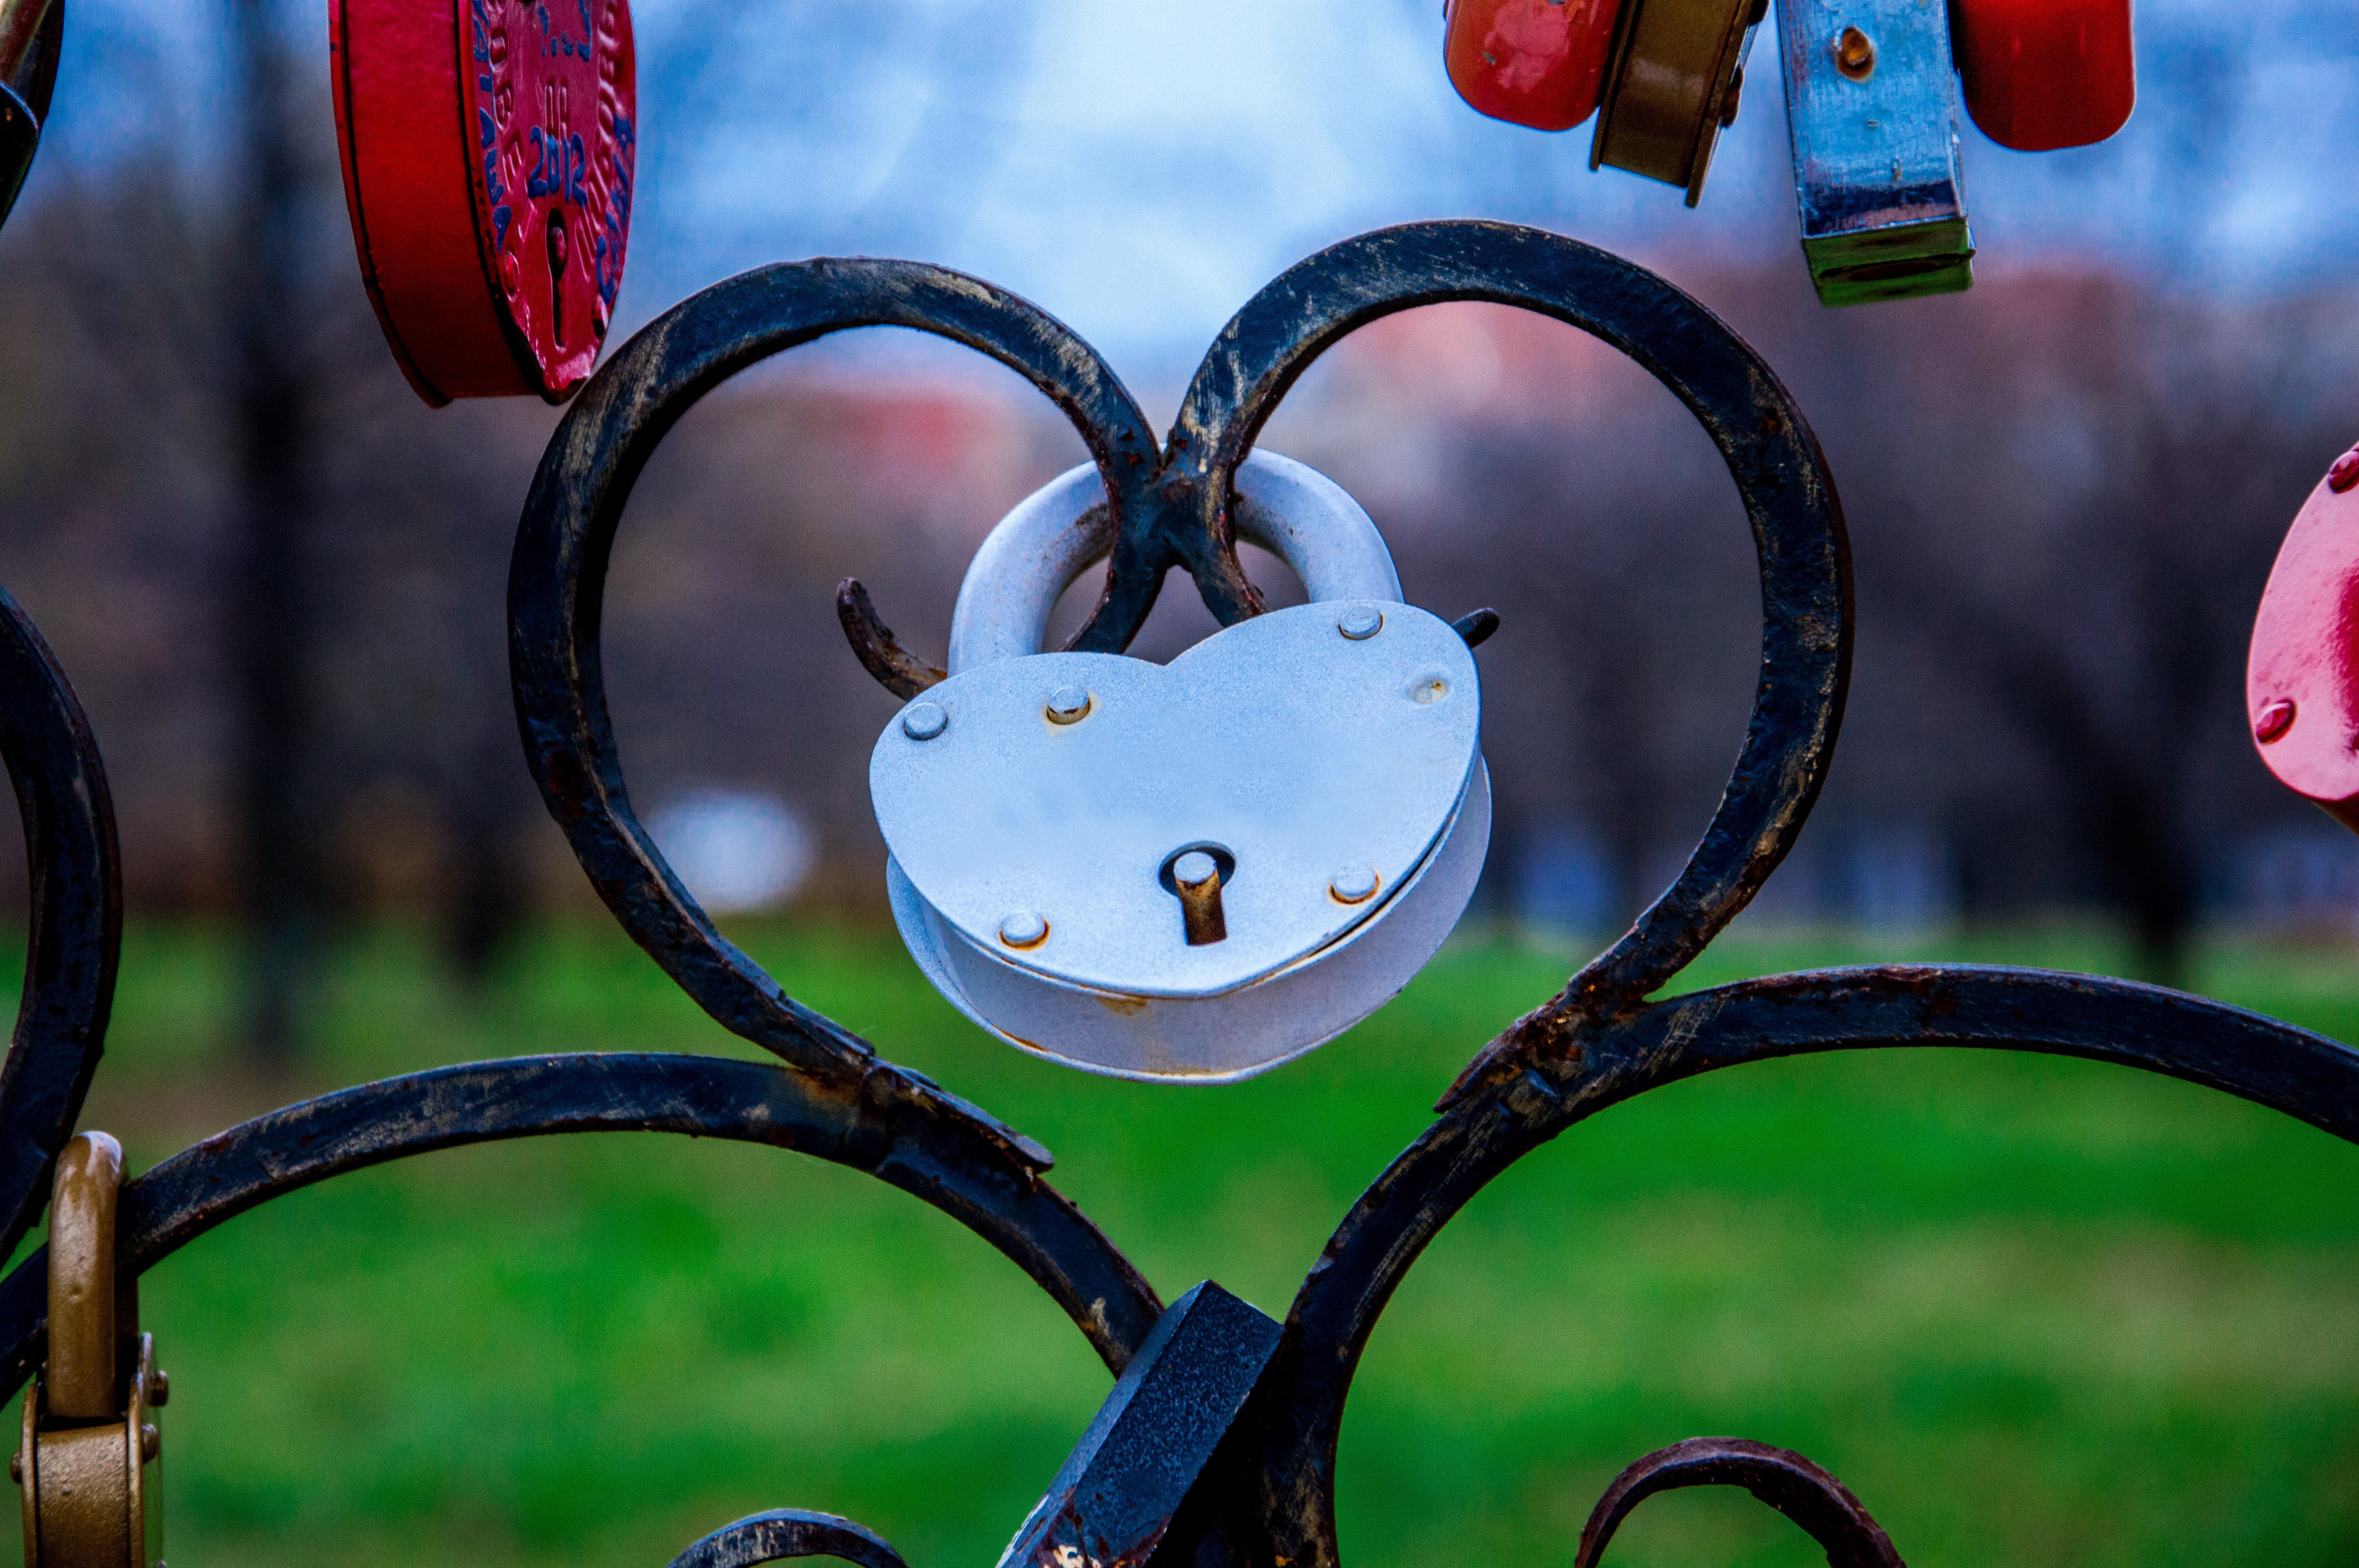 white heart shape padlock